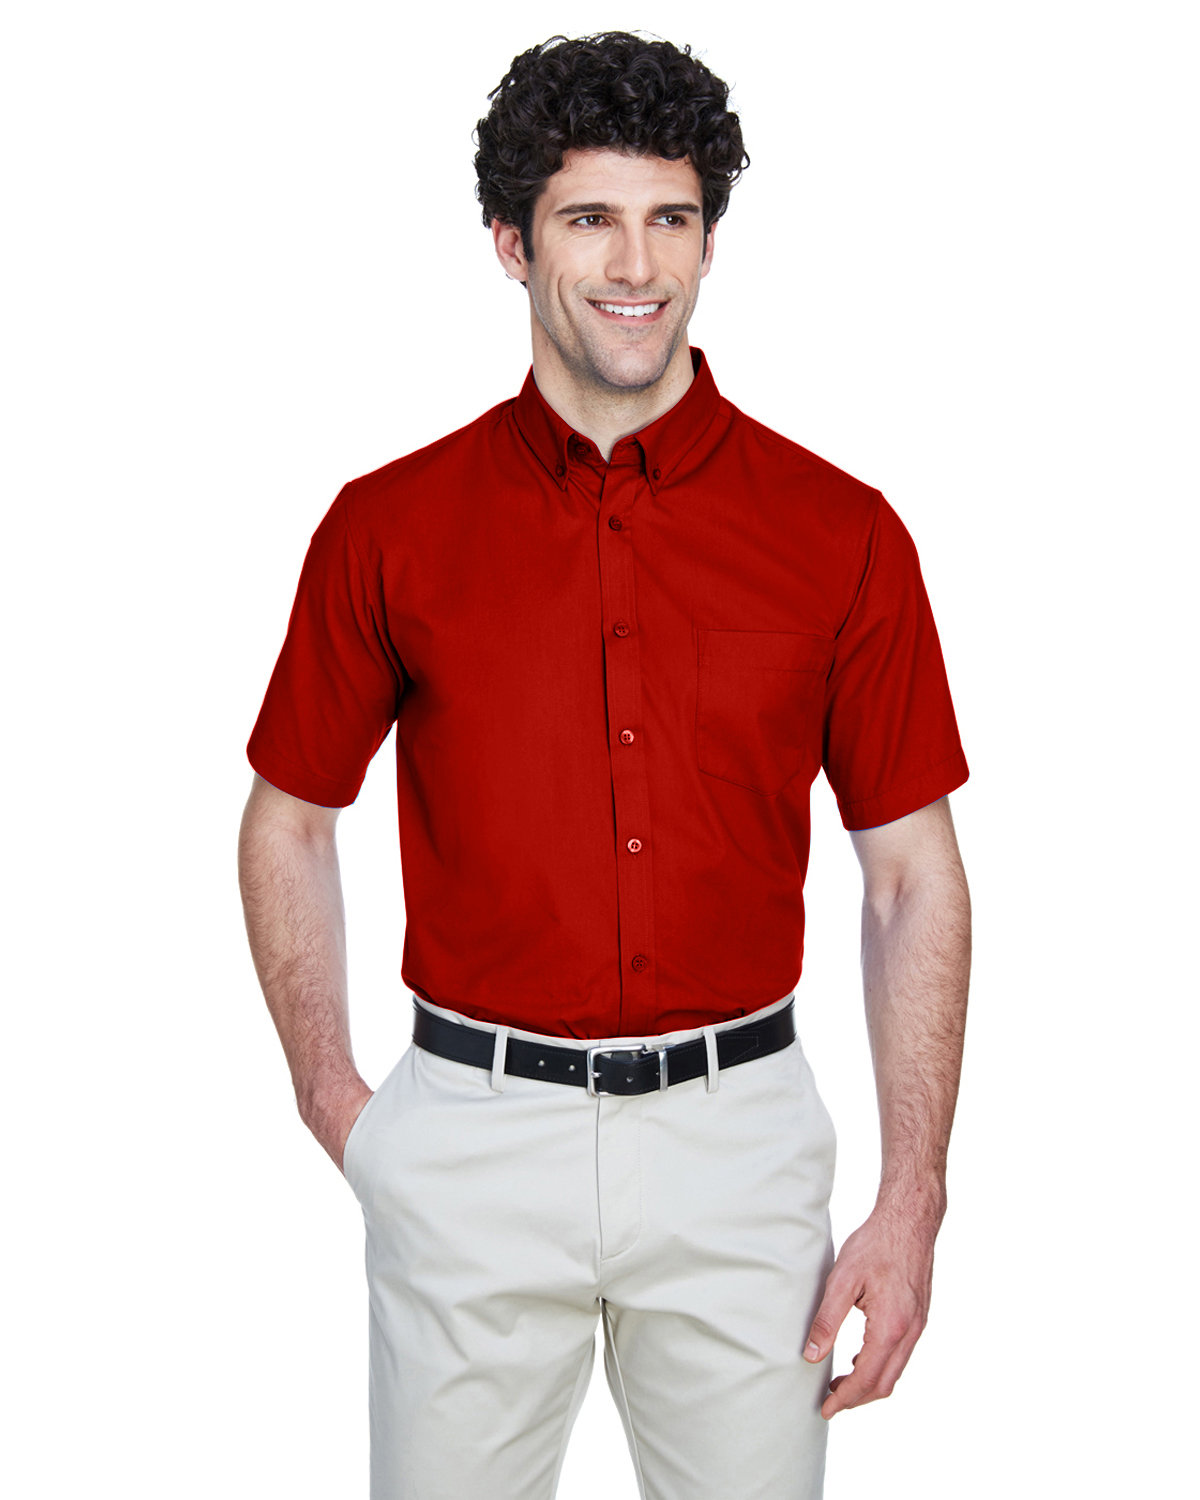 CORE365 Men's Optimum Short-Sleeve Twill Shirt CLASSIC RED 